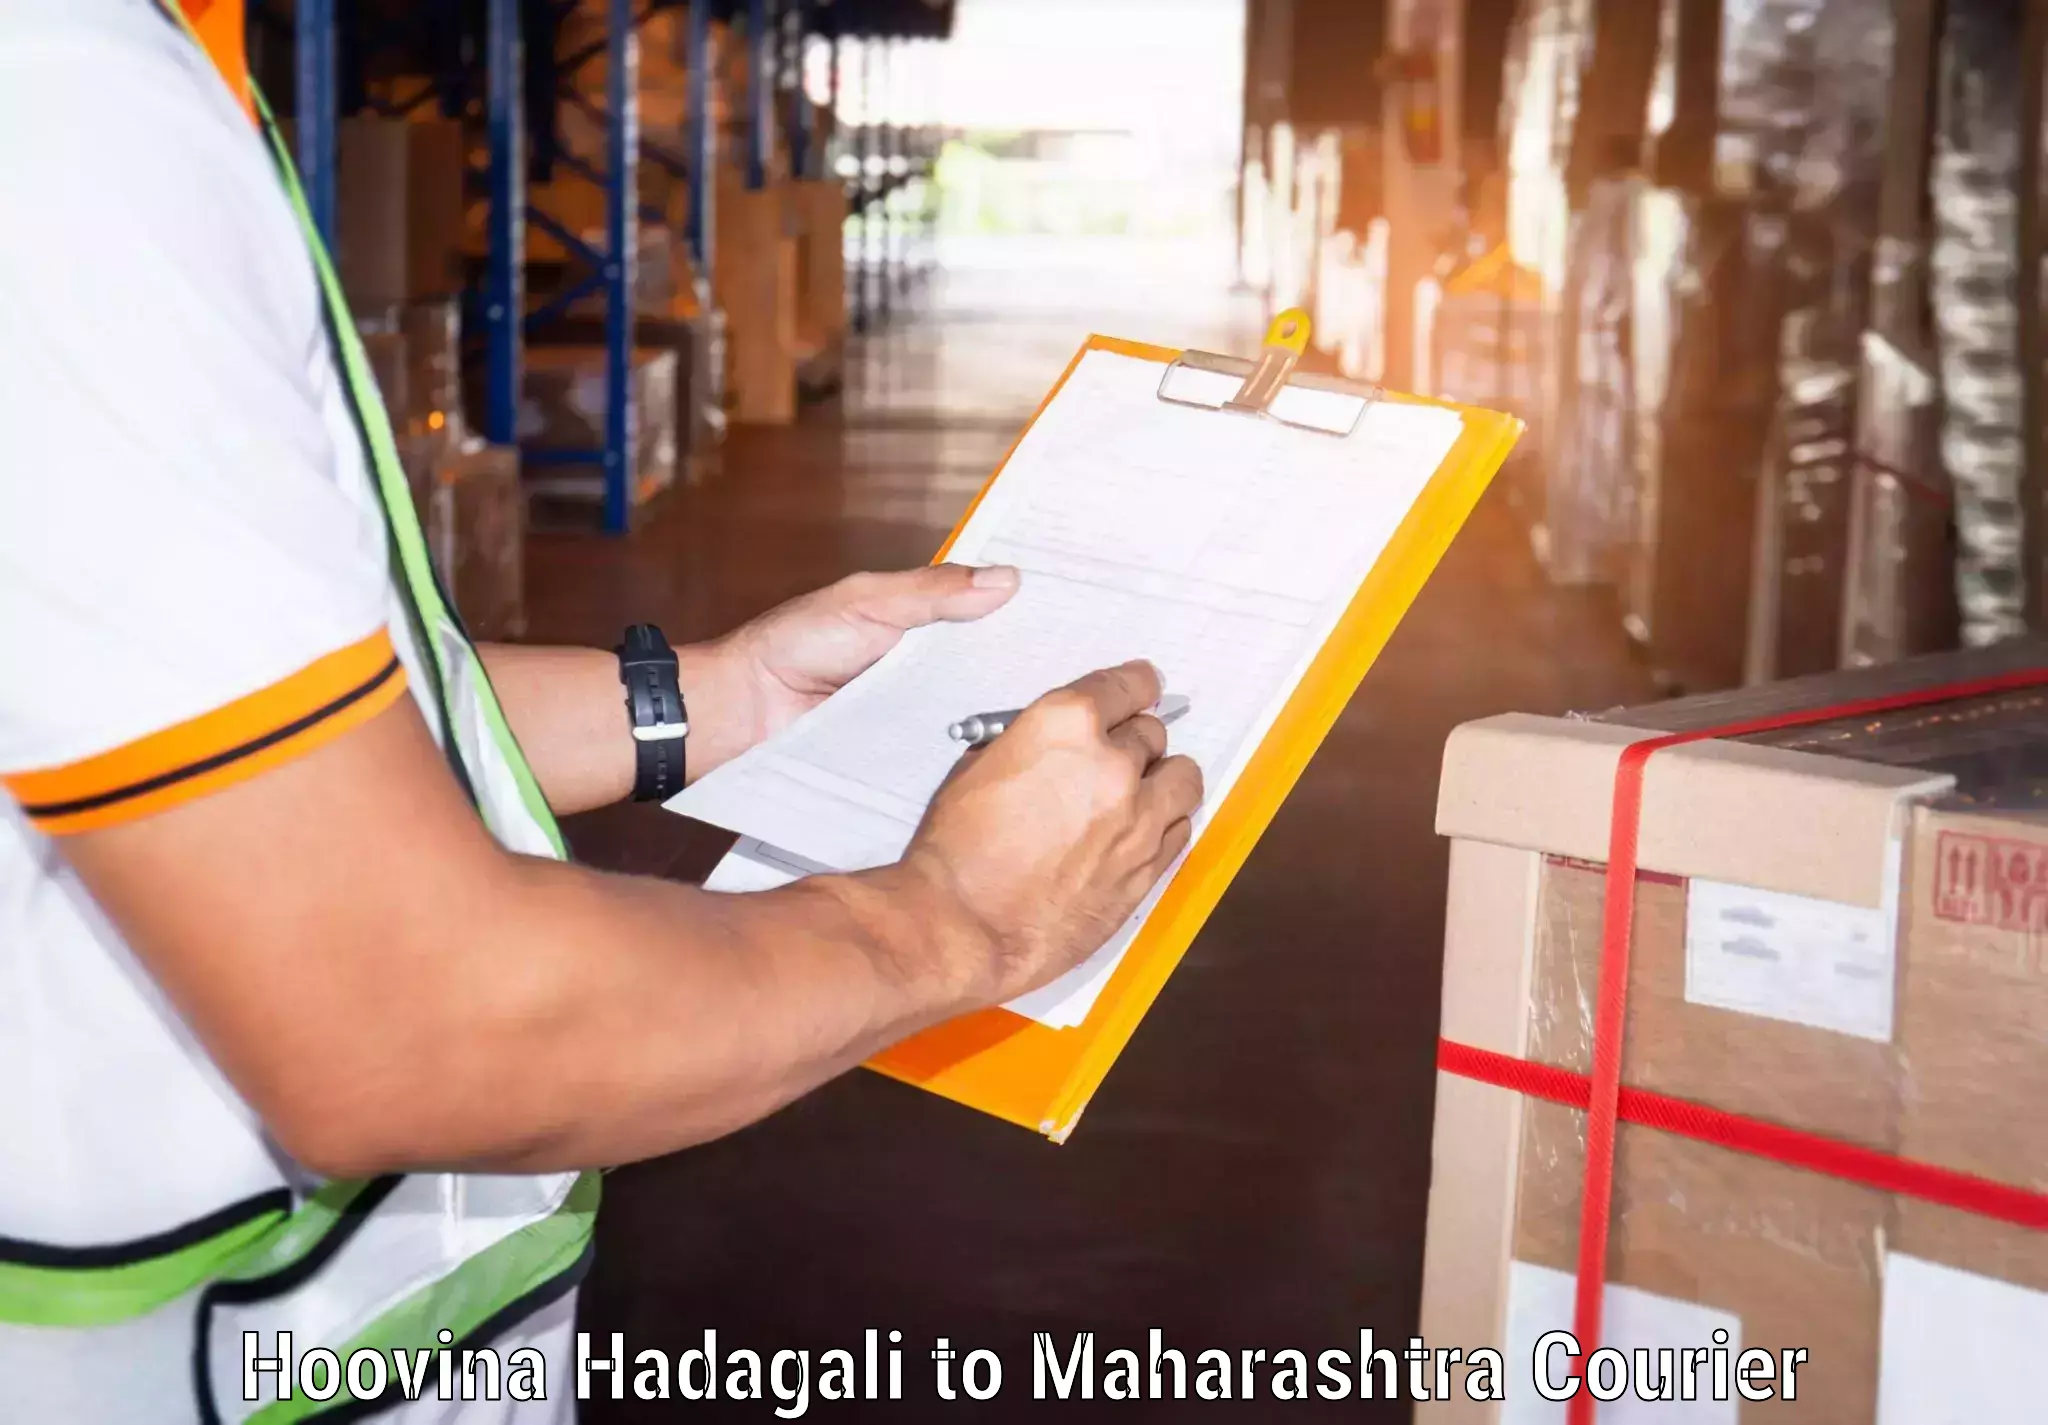 Efficient freight service Hoovina Hadagali to DY Patil Vidyapeeth Mumbai